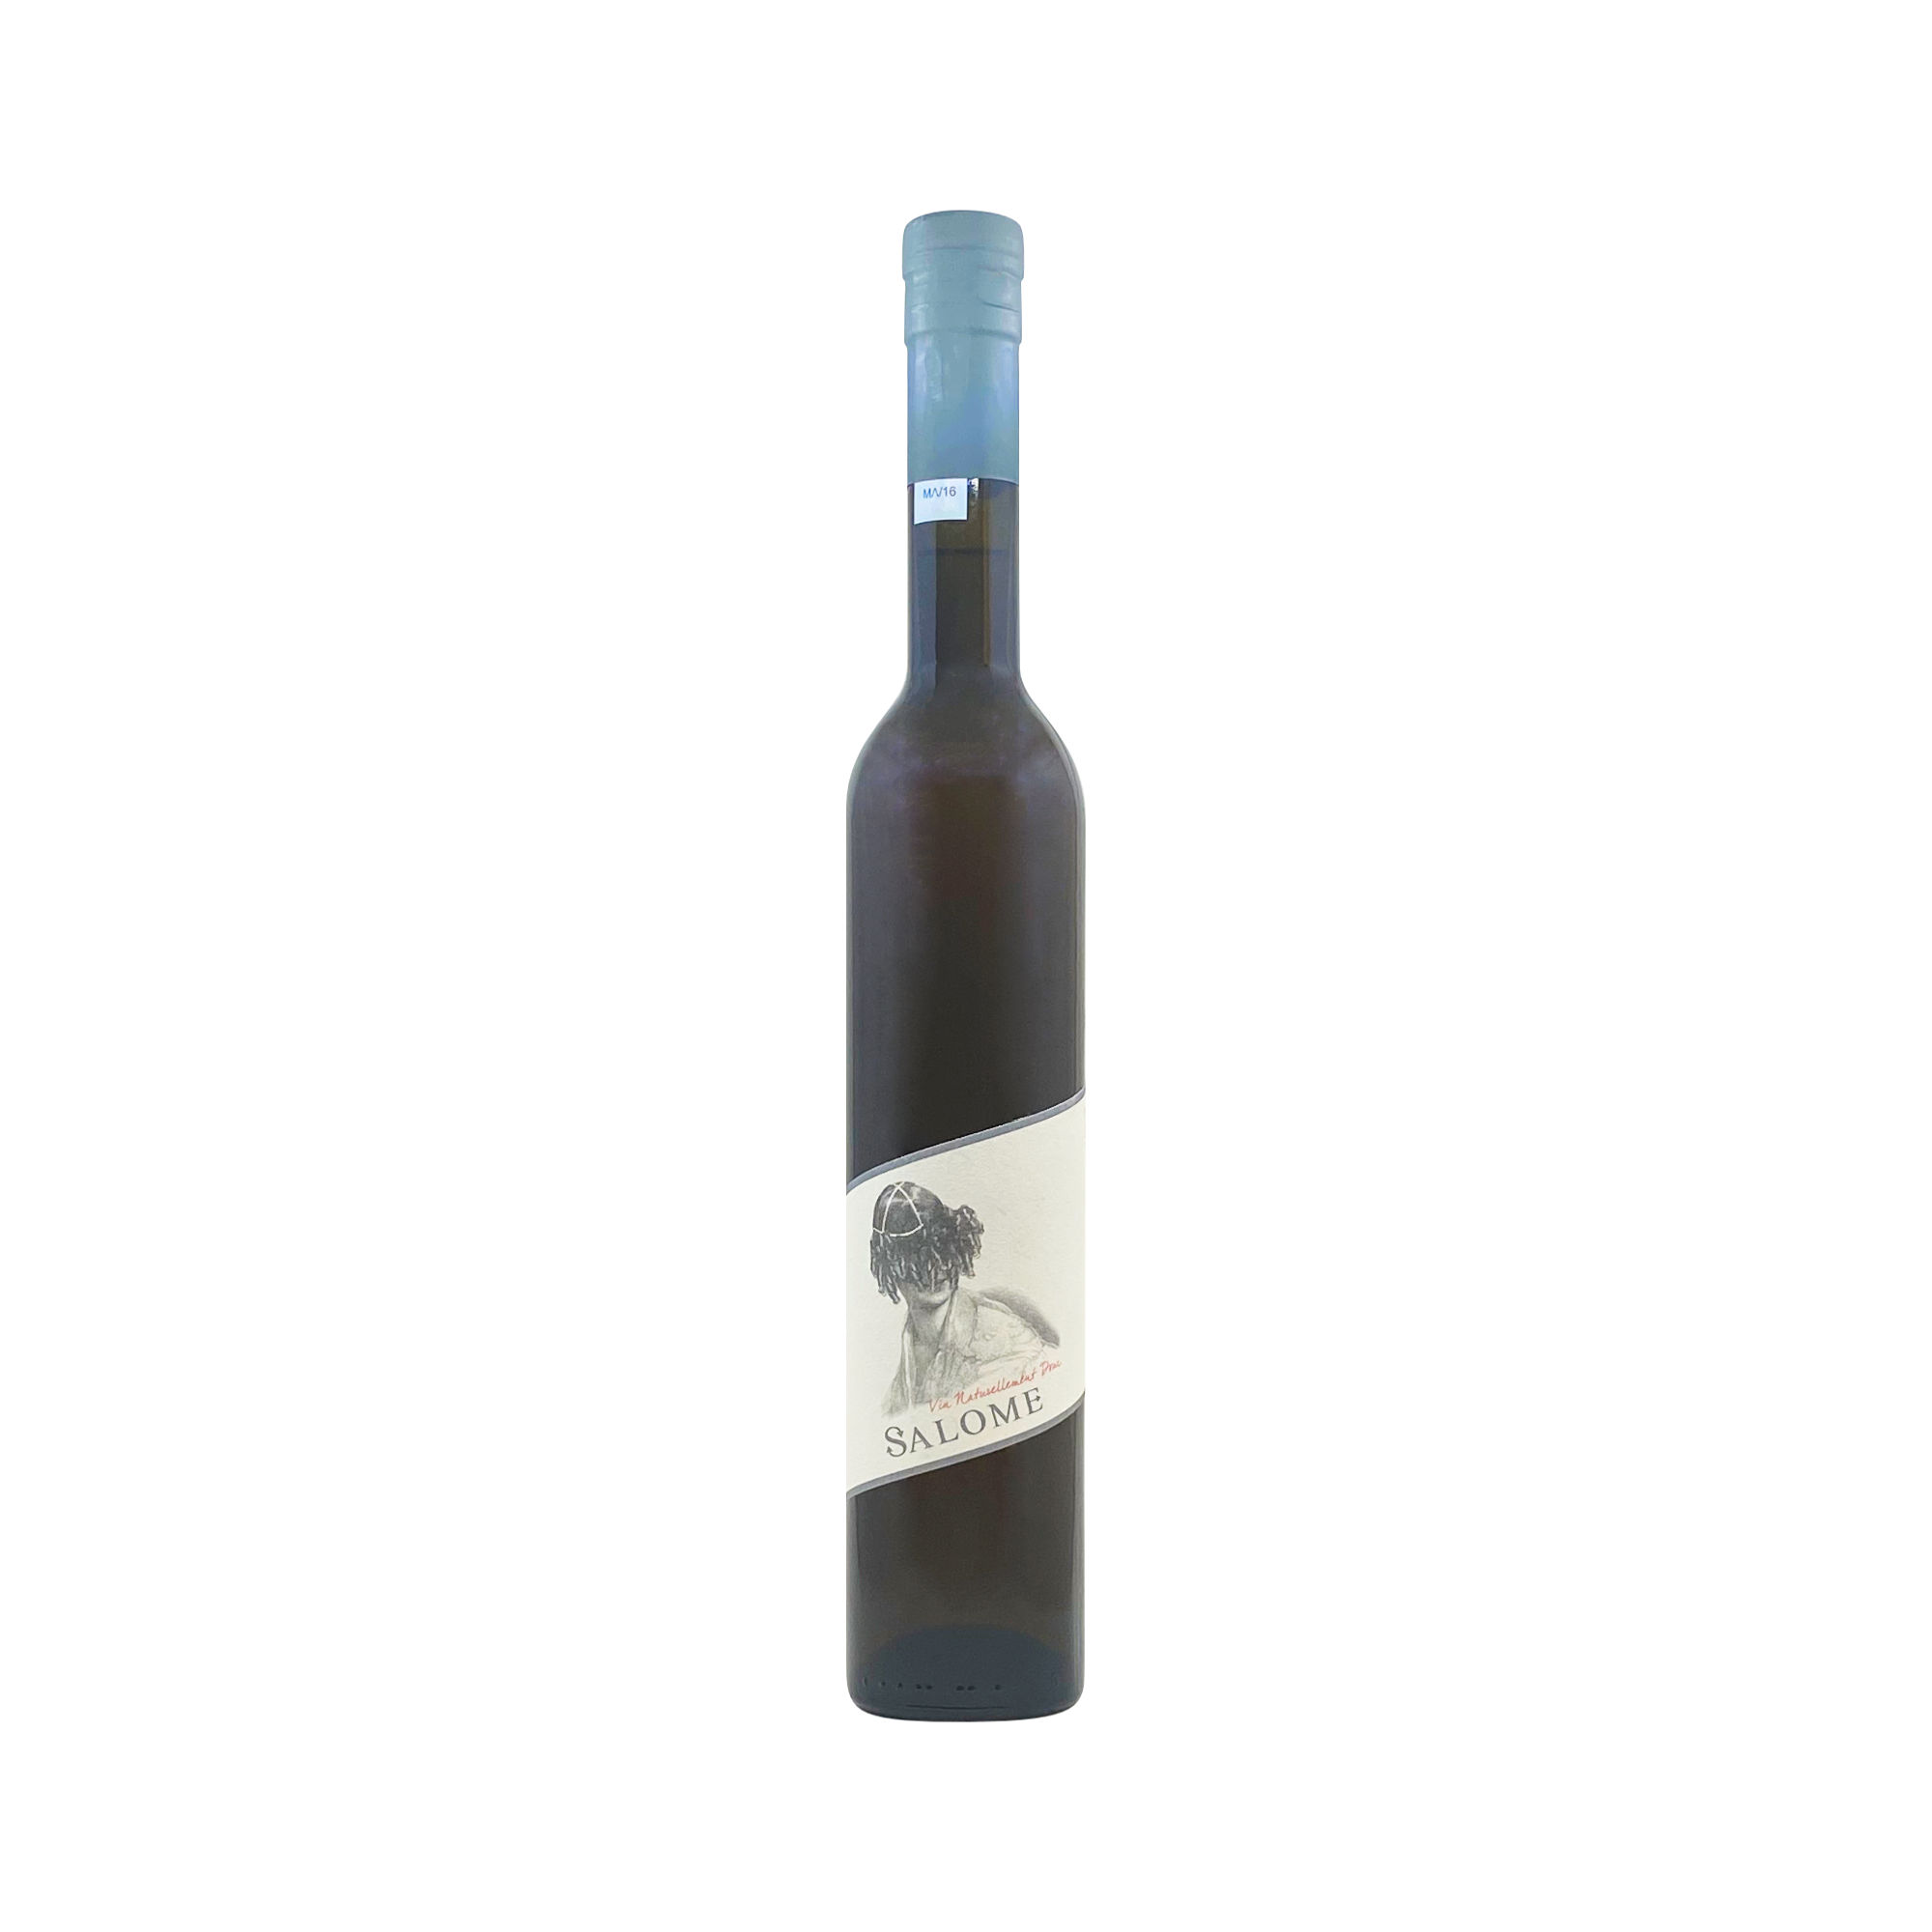 Salome sweet wine - Muscat of Alexandria - Sun Dried - Organic - Garalis, Lemnos island, Greece